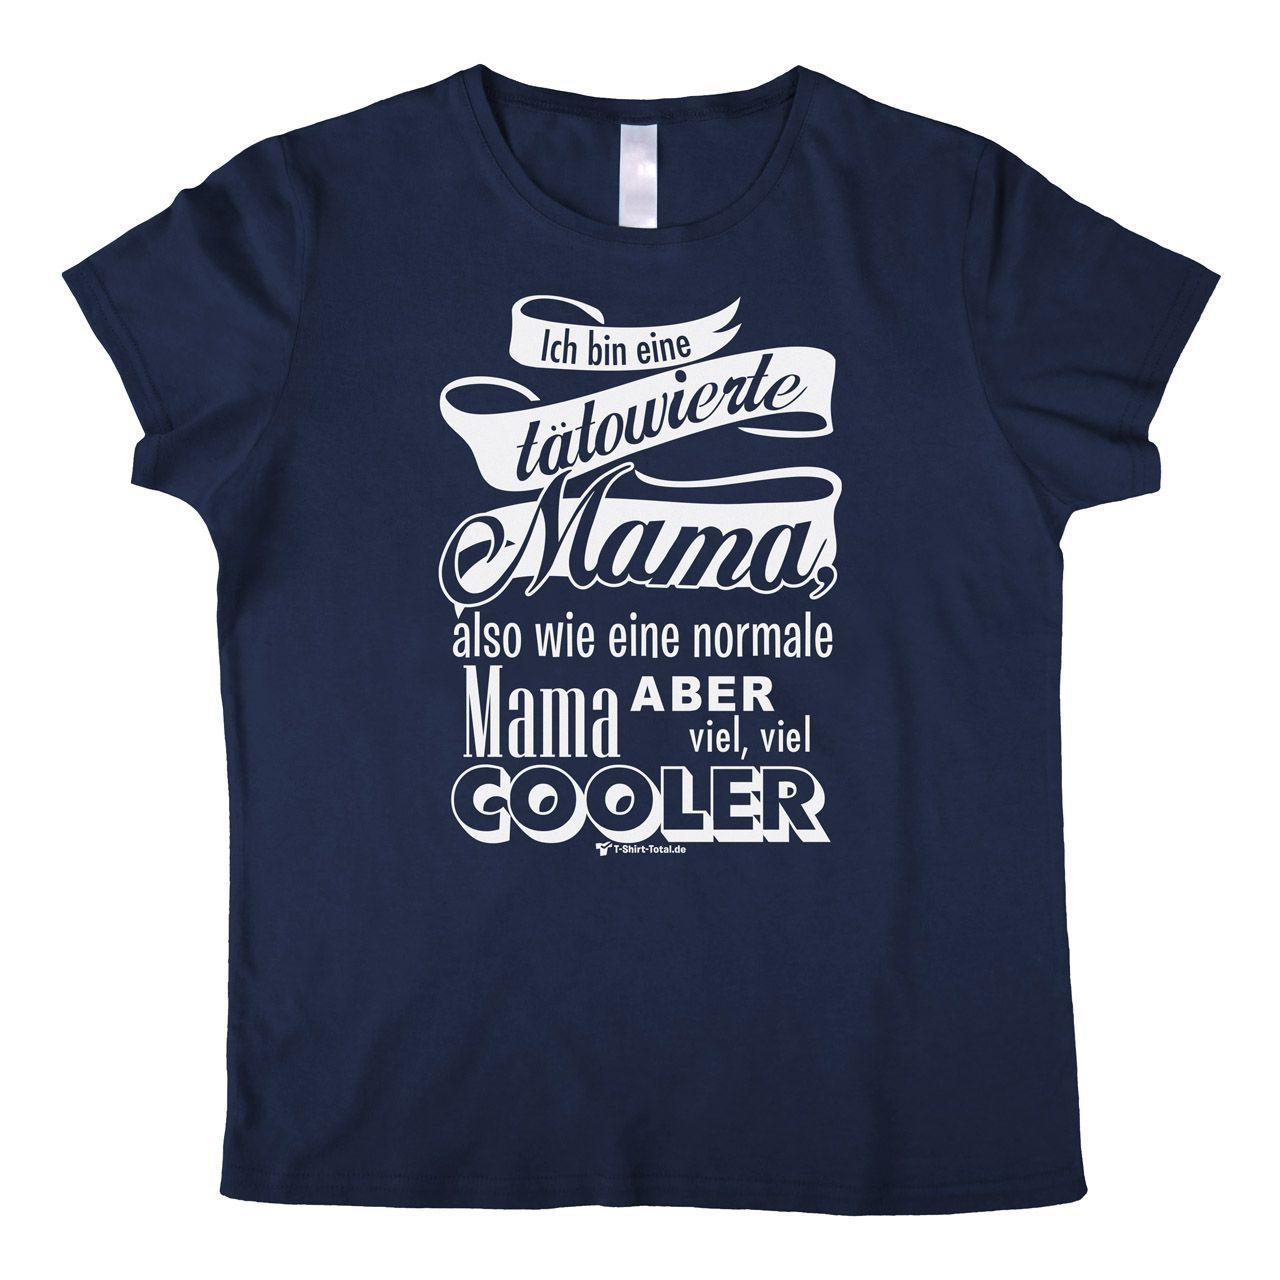 Tätowierte Mama Woman T-Shirt navy Small